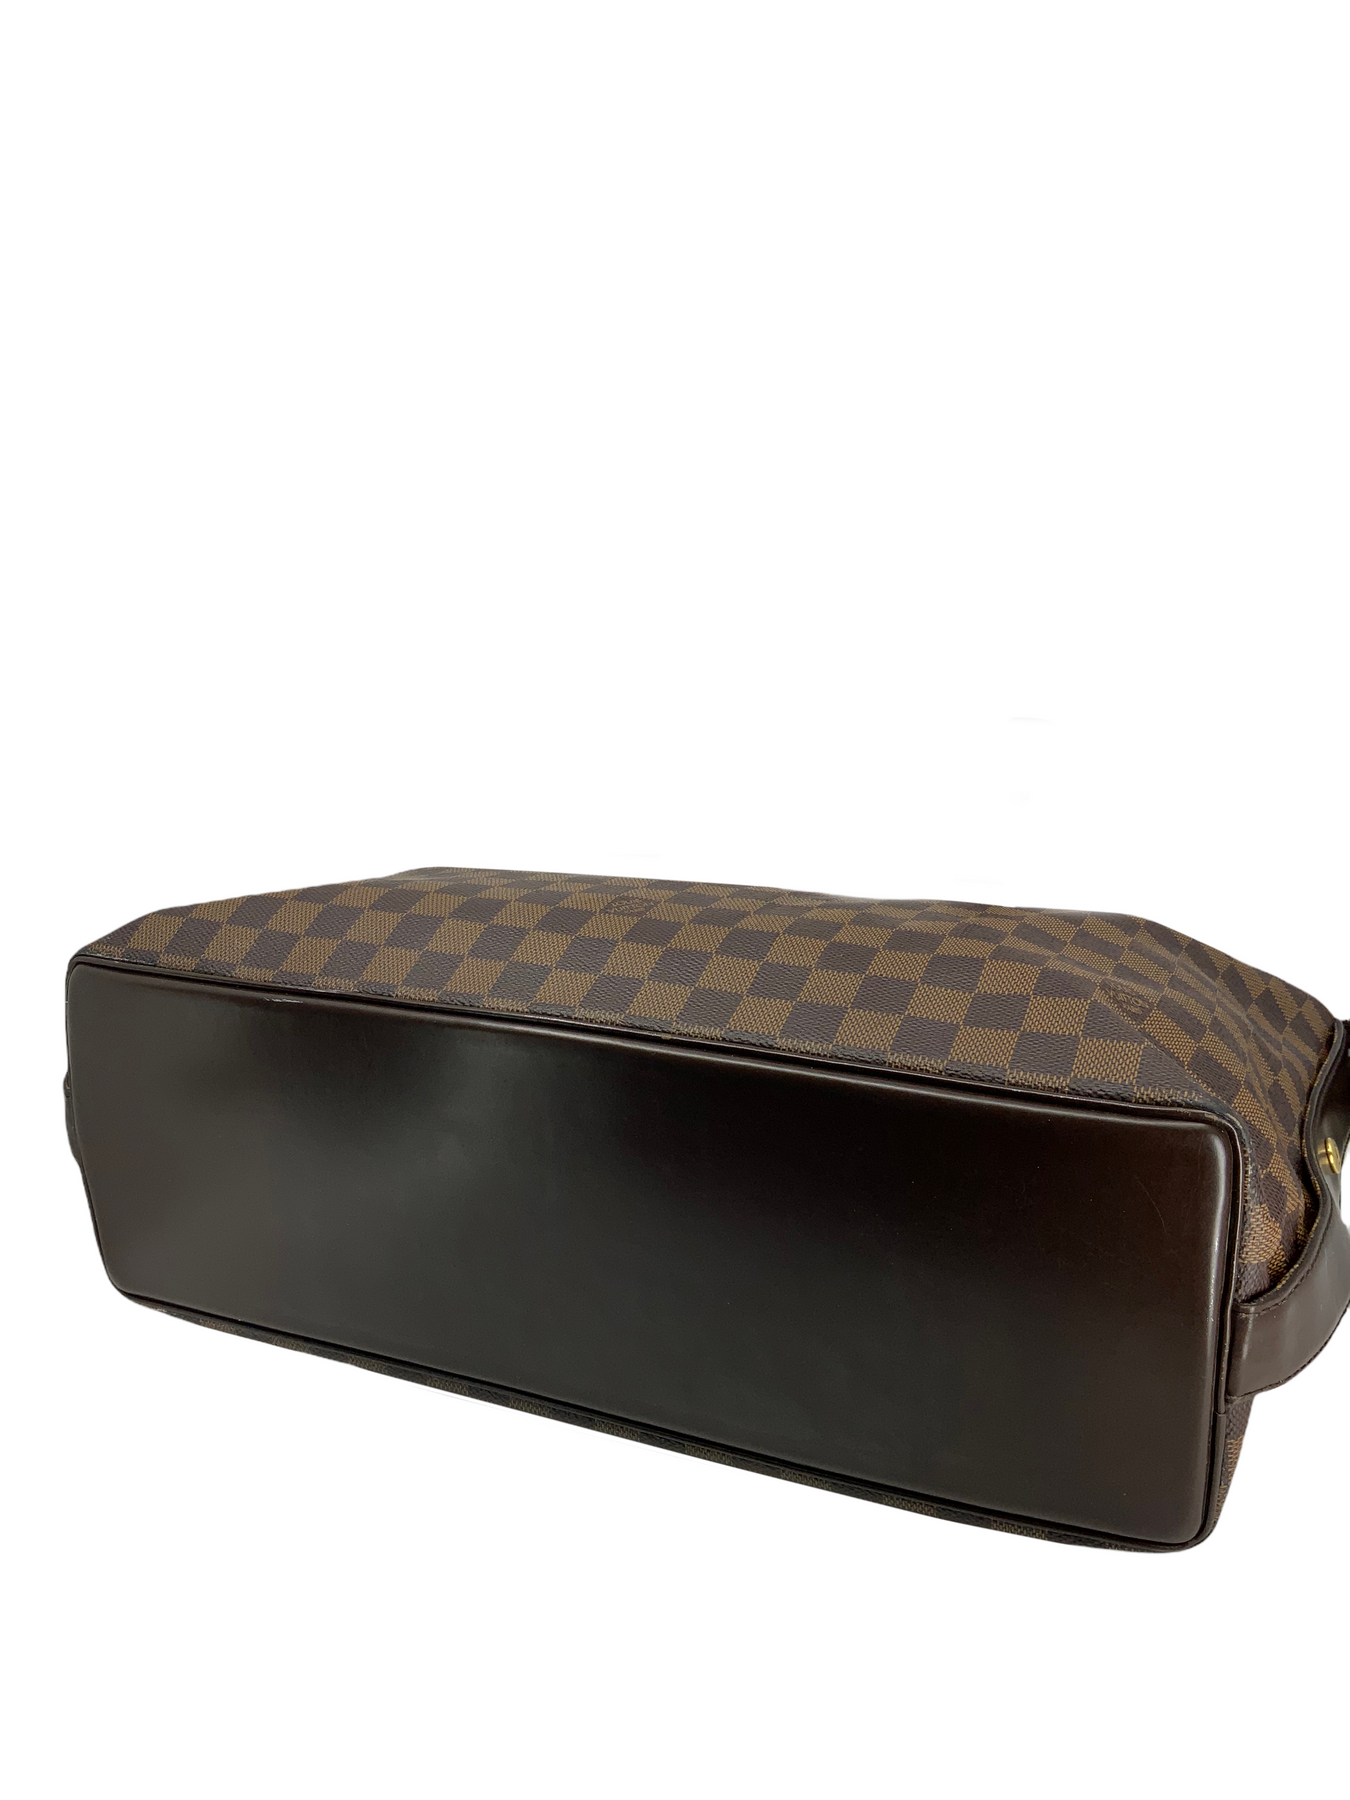 Authentic Louis Vuitton Damier Ebene Chelsea Tote Bag w/ COA Free Shipping